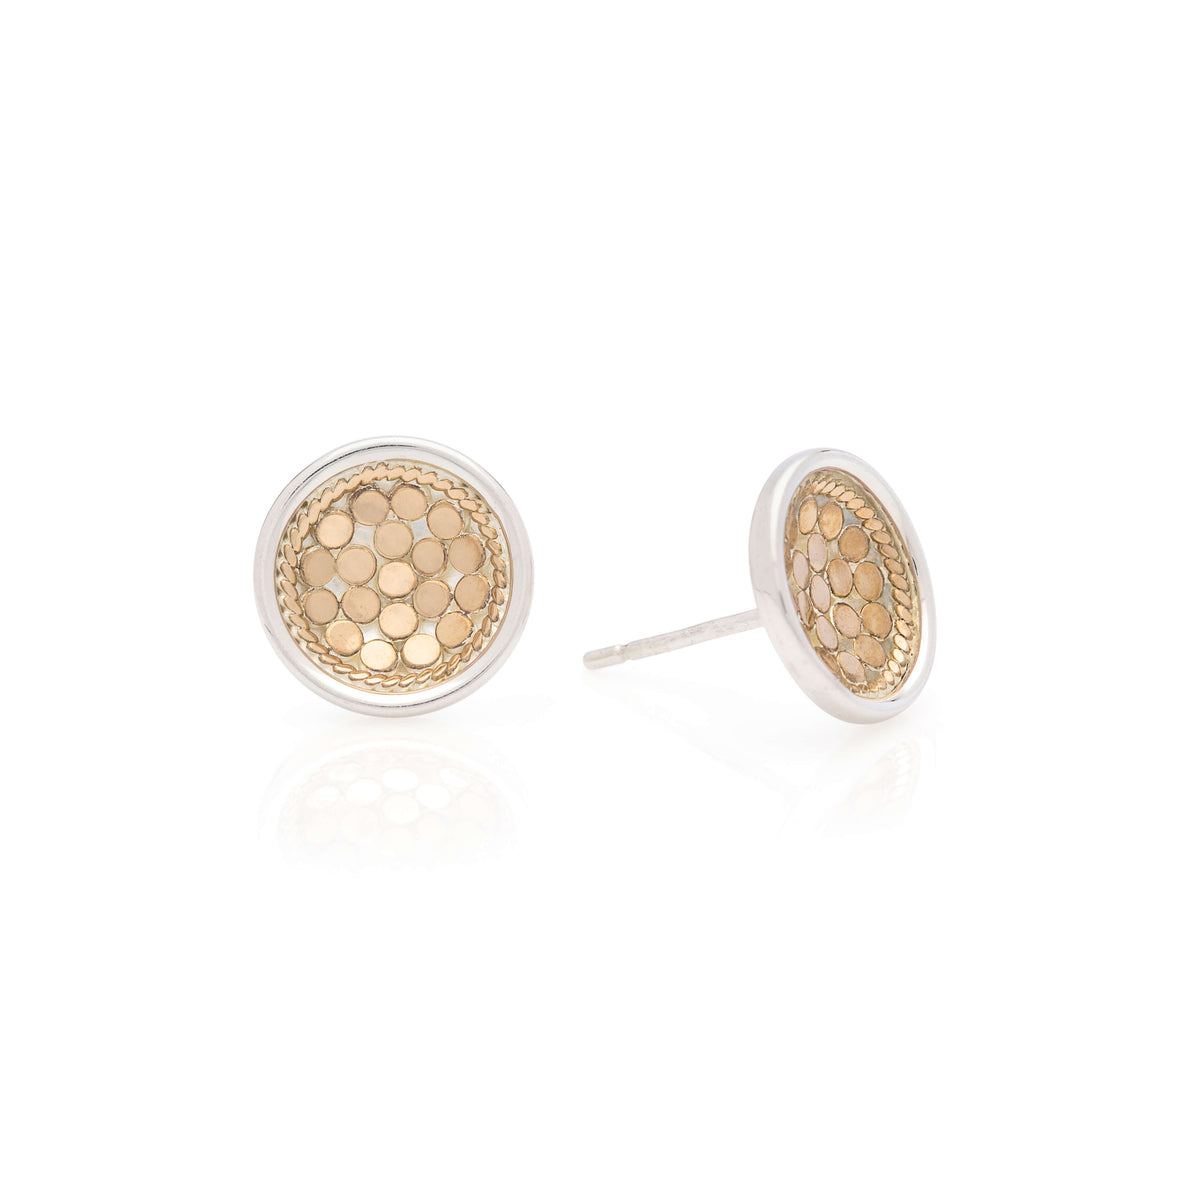 AB 0093E gold large stud earrings